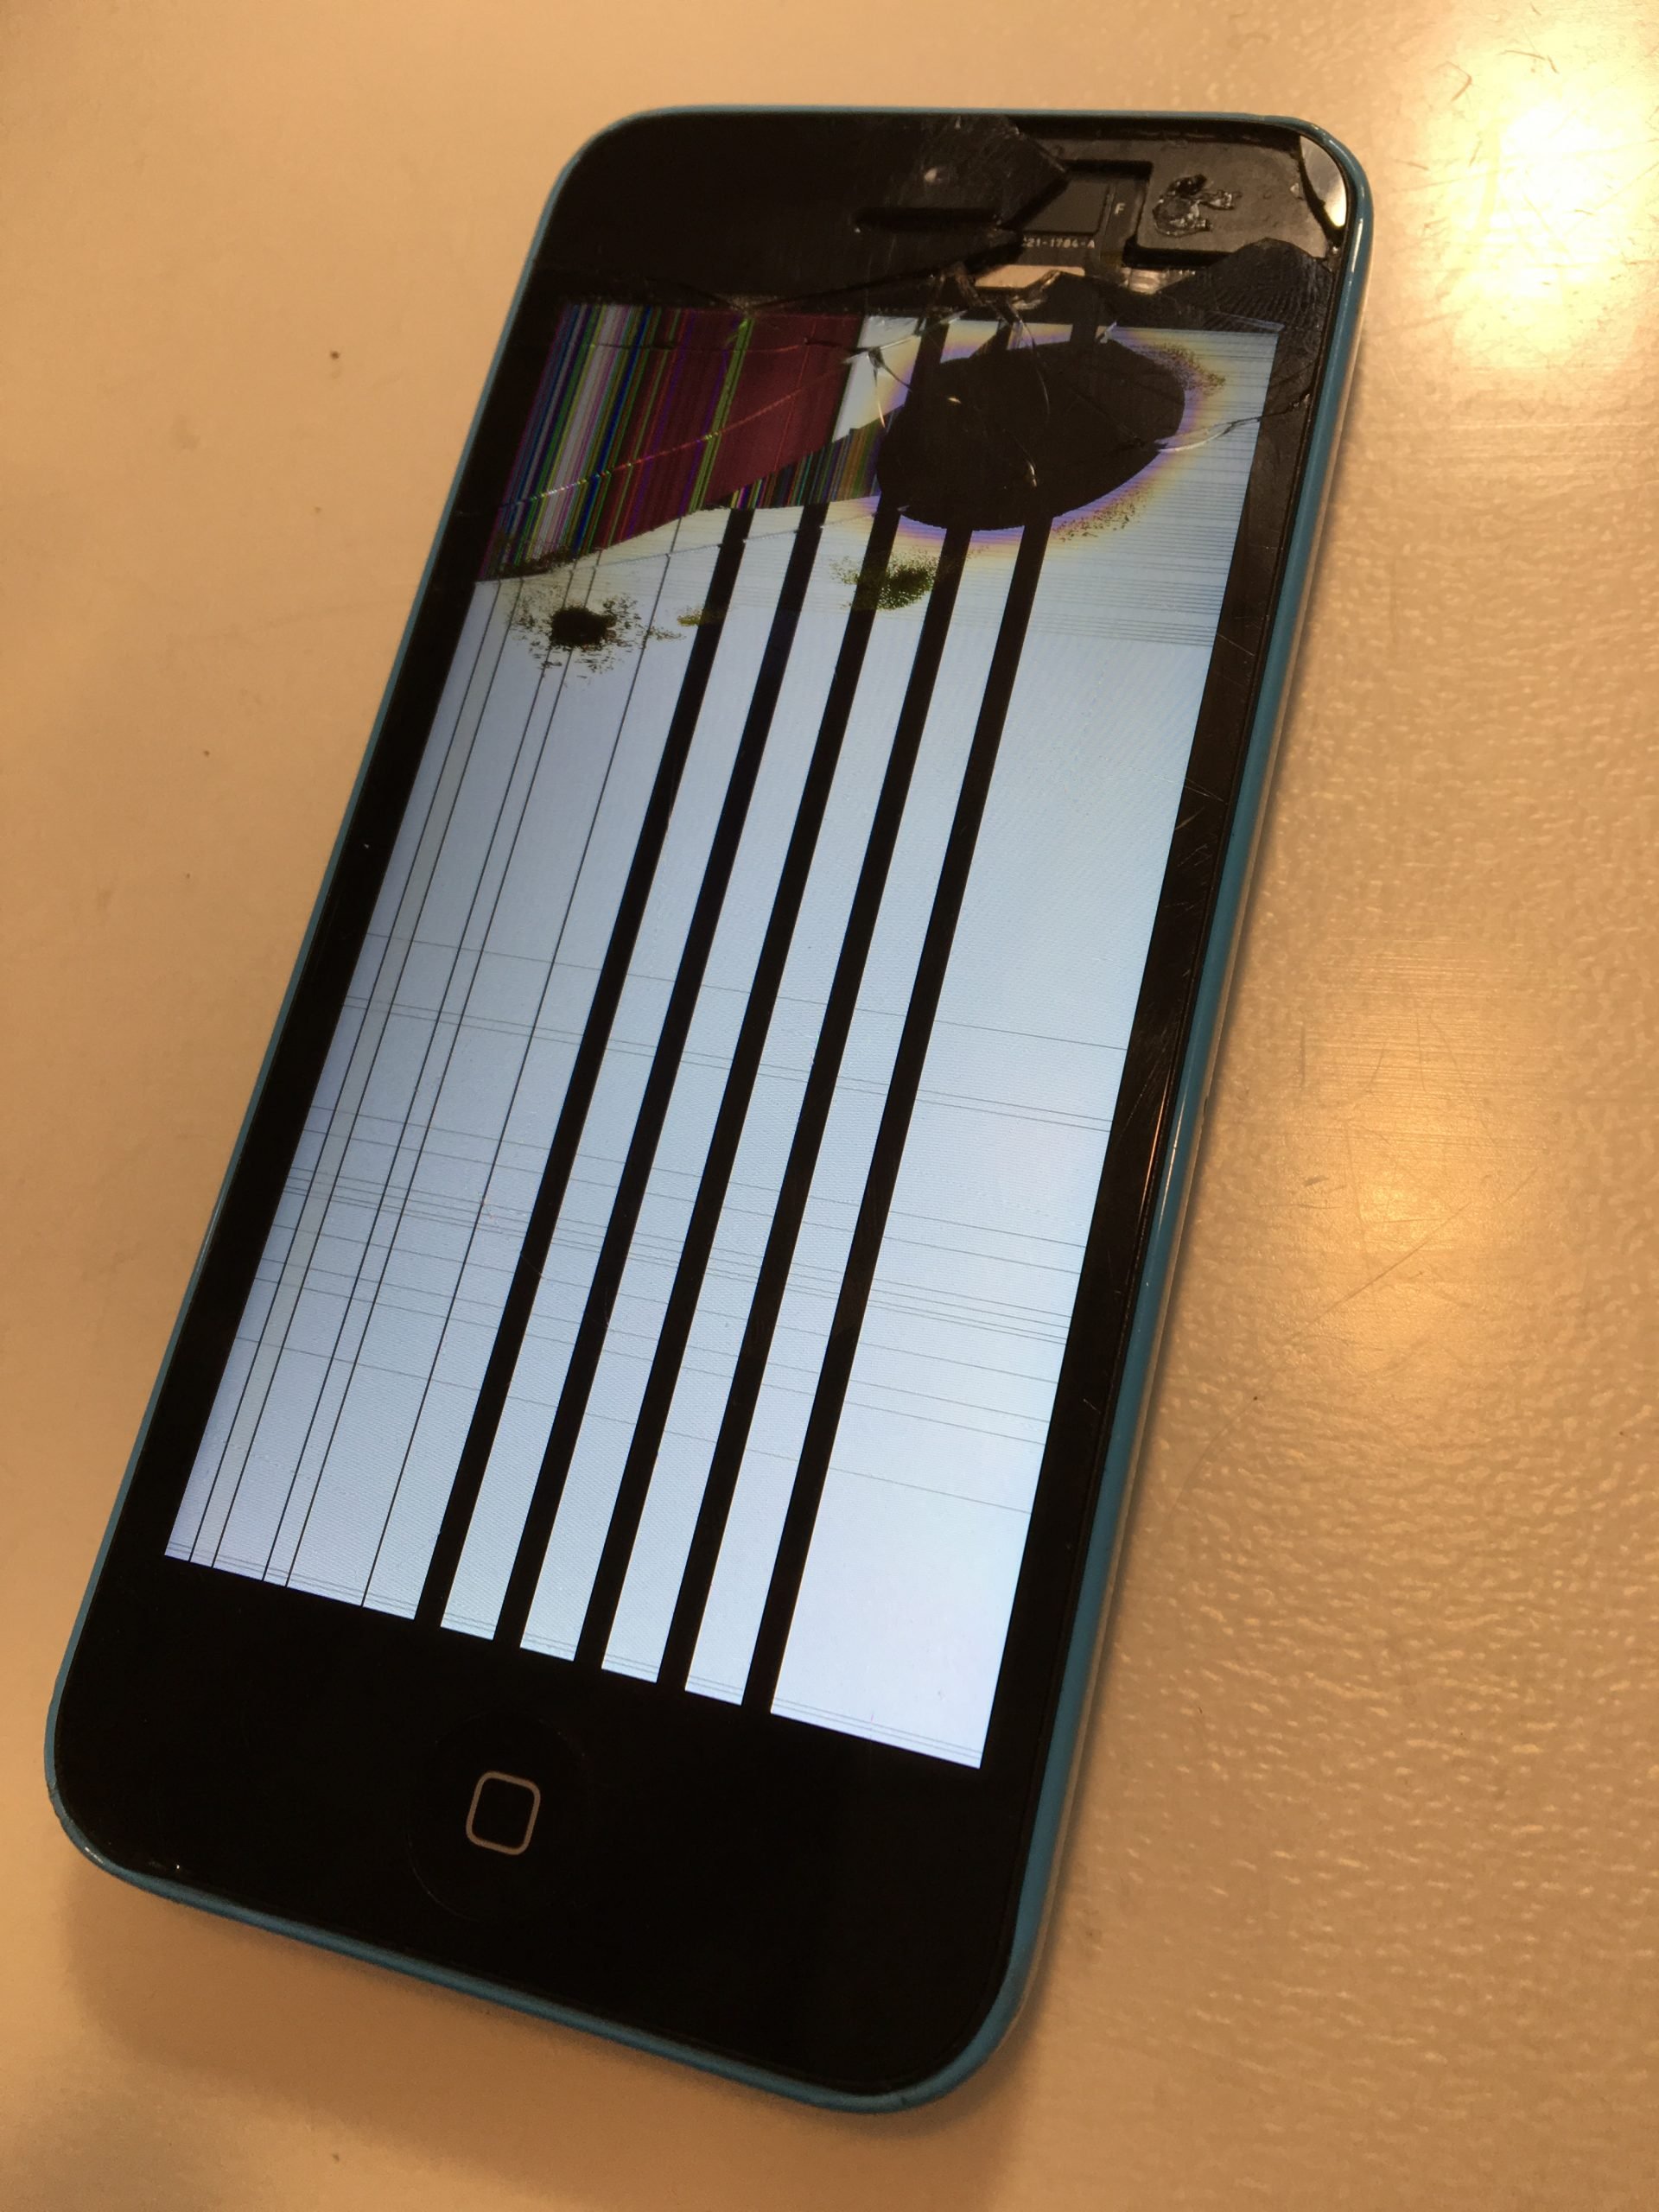 Fixing my broken iPhone screen in Dubai